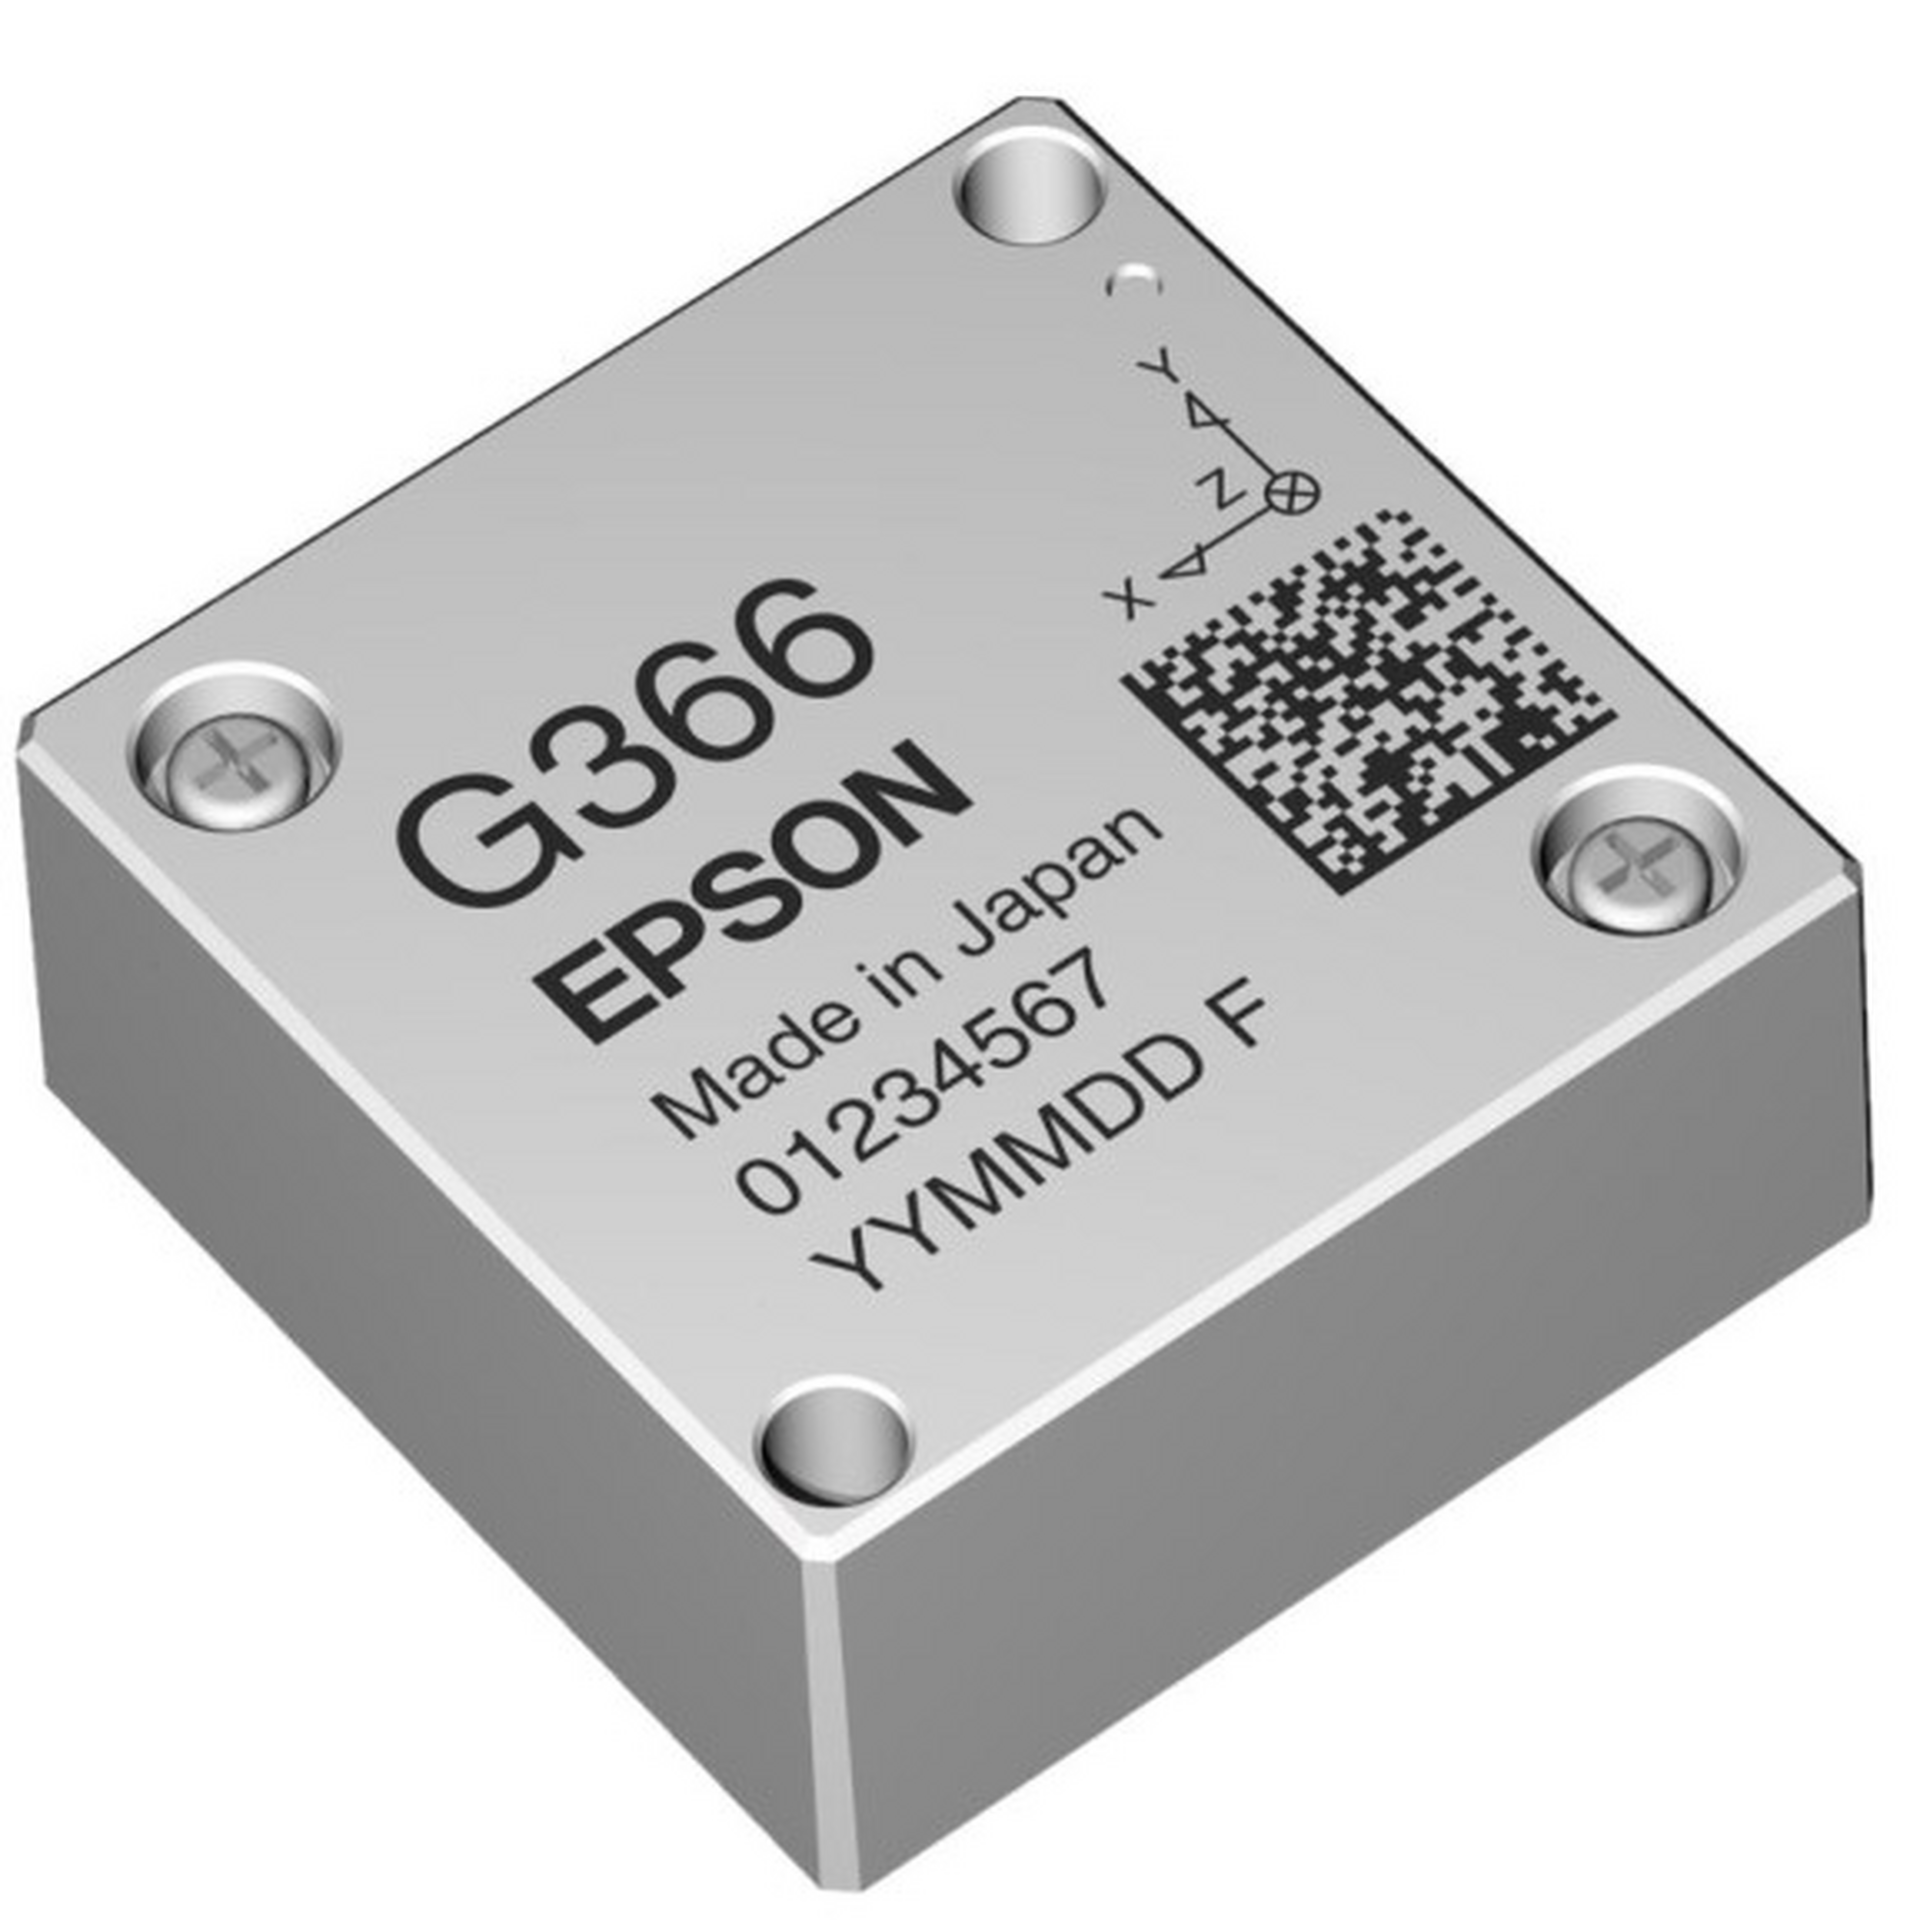 Epson G366